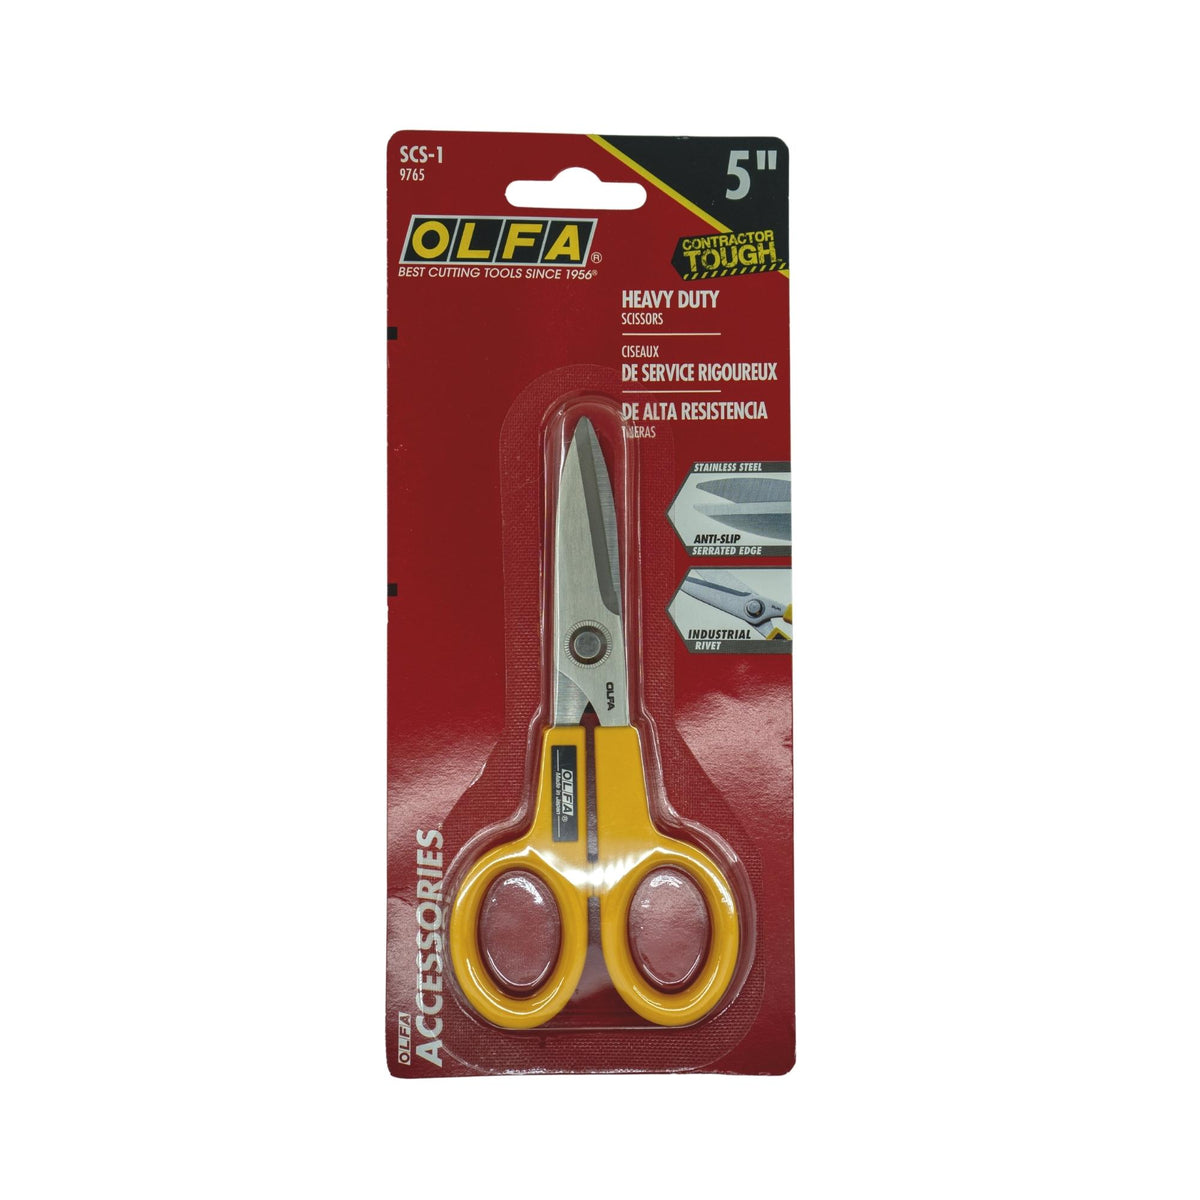 Product Review: OLFA 5 Precision Appliqué Scissors - Quilting Gallery